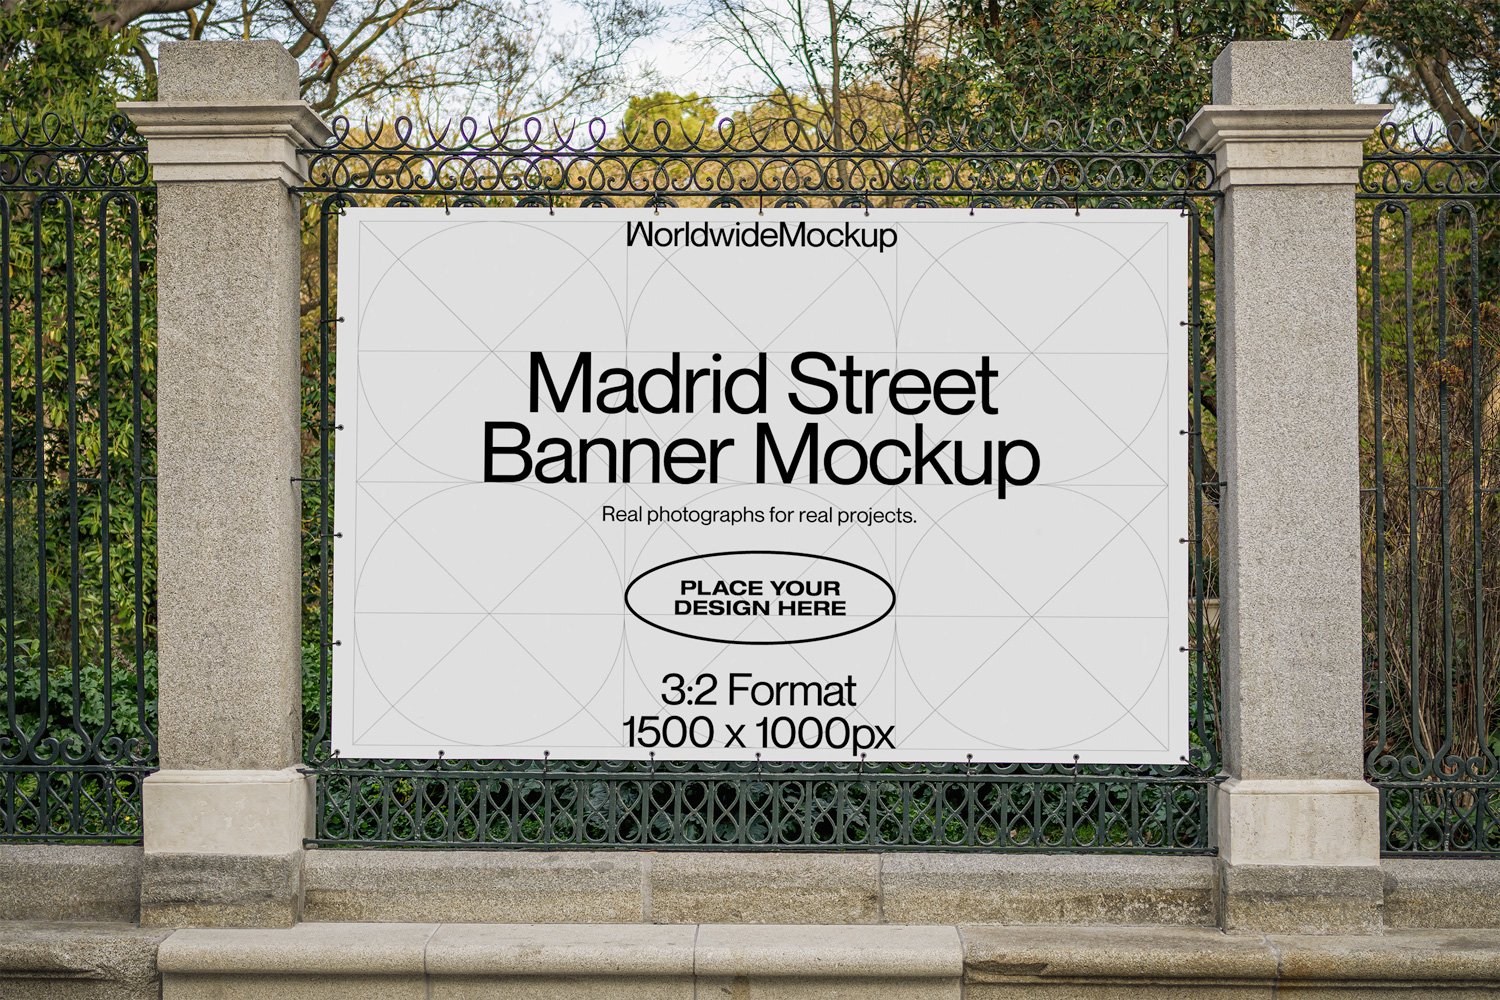 Madrid Street Banner Mockup cover image.